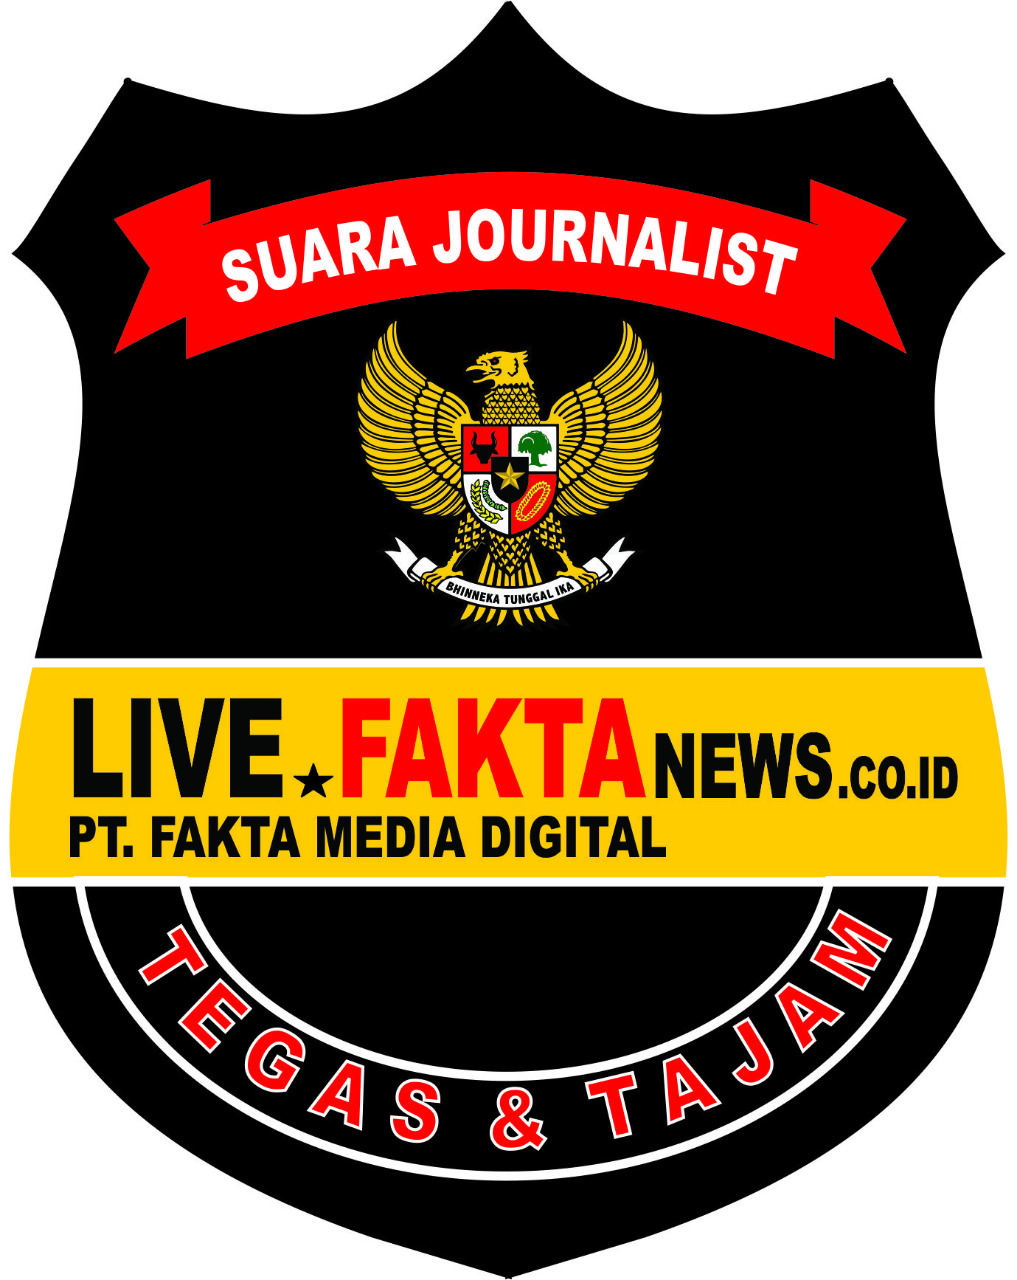 LIVE FAKTA NEWS